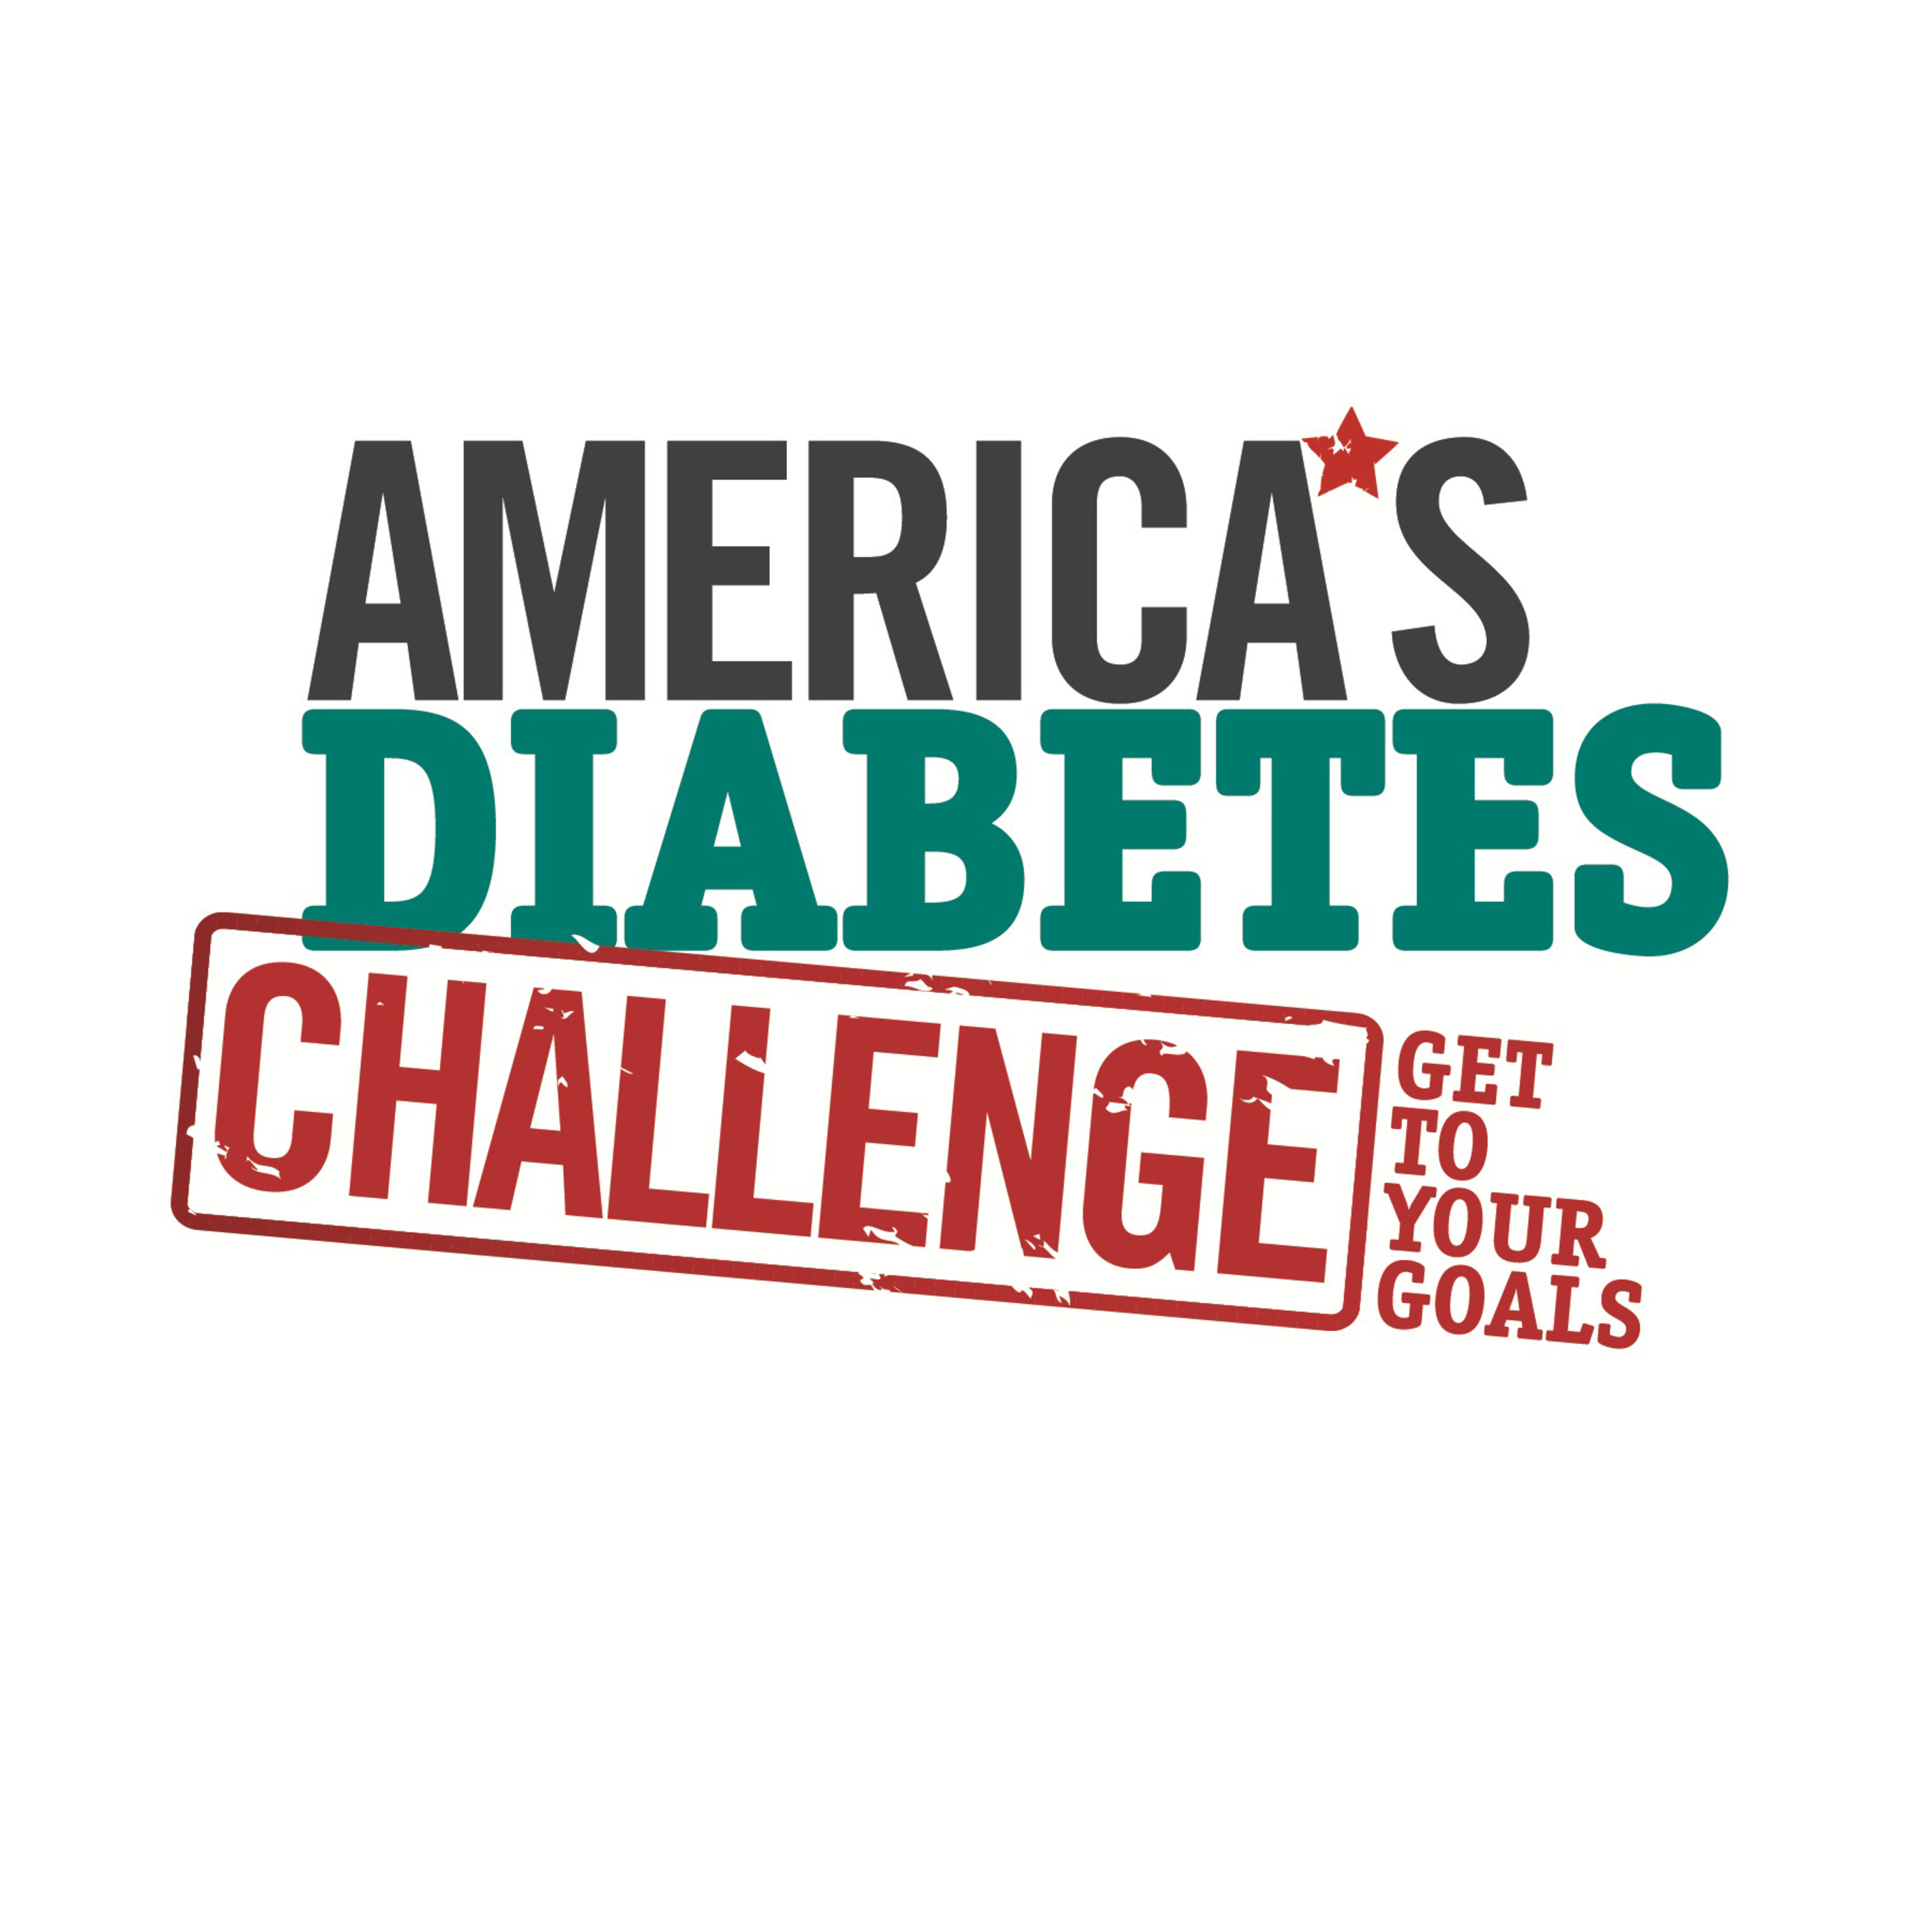 America's Diabetes Challenge: Get To Your Goals (PRNewsFoto/Merck) (PRNewsFoto/Merck)